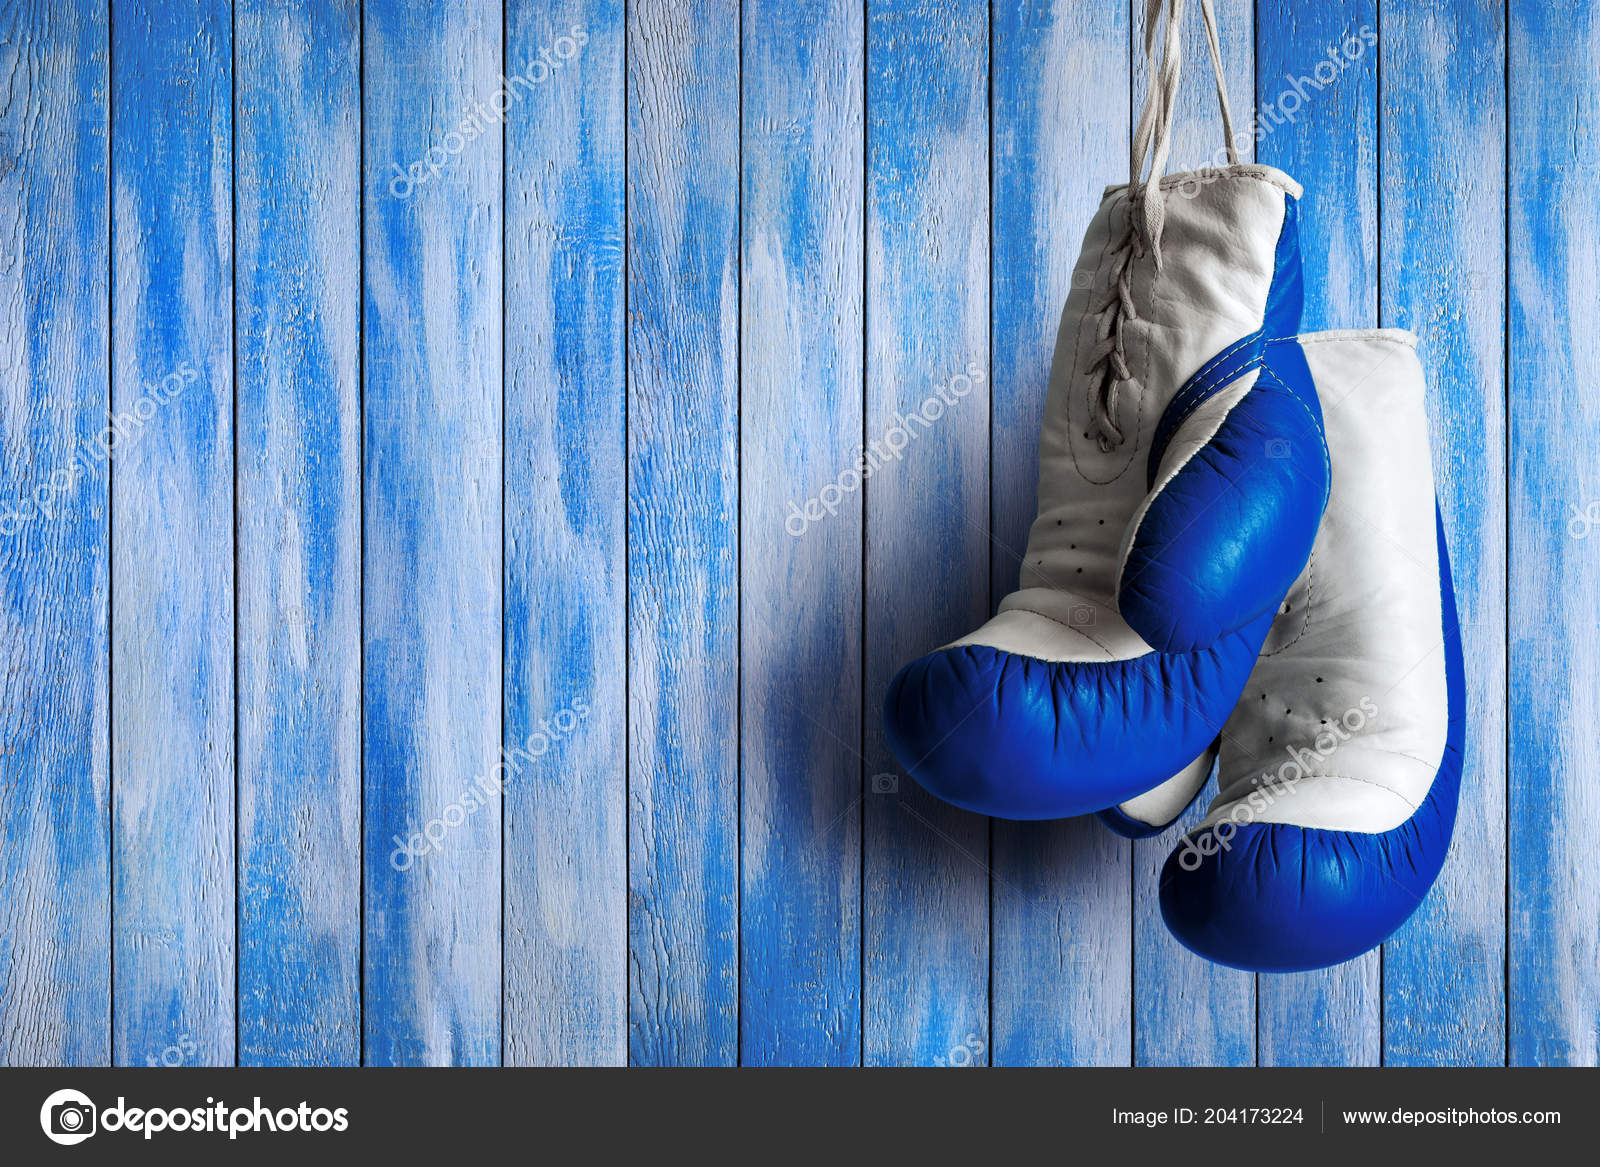 Blue Boxing Gloves Blue Wooden Background Stock Photo by ©VladVasilkov  204173224